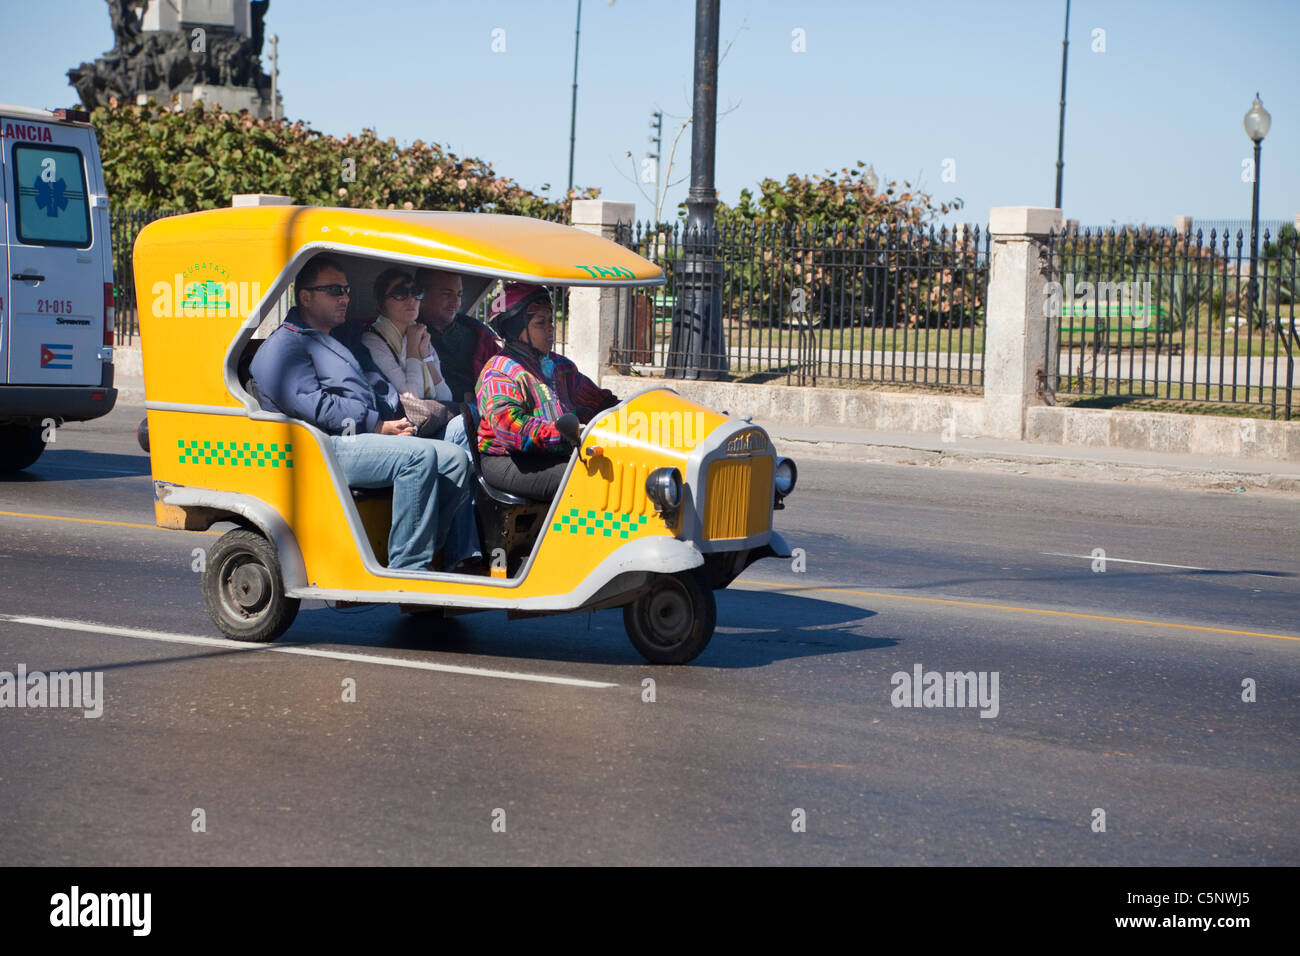 Cuba, Havana. Three-wheeled Taxi with Three Passengers and Driver. Stock Photo